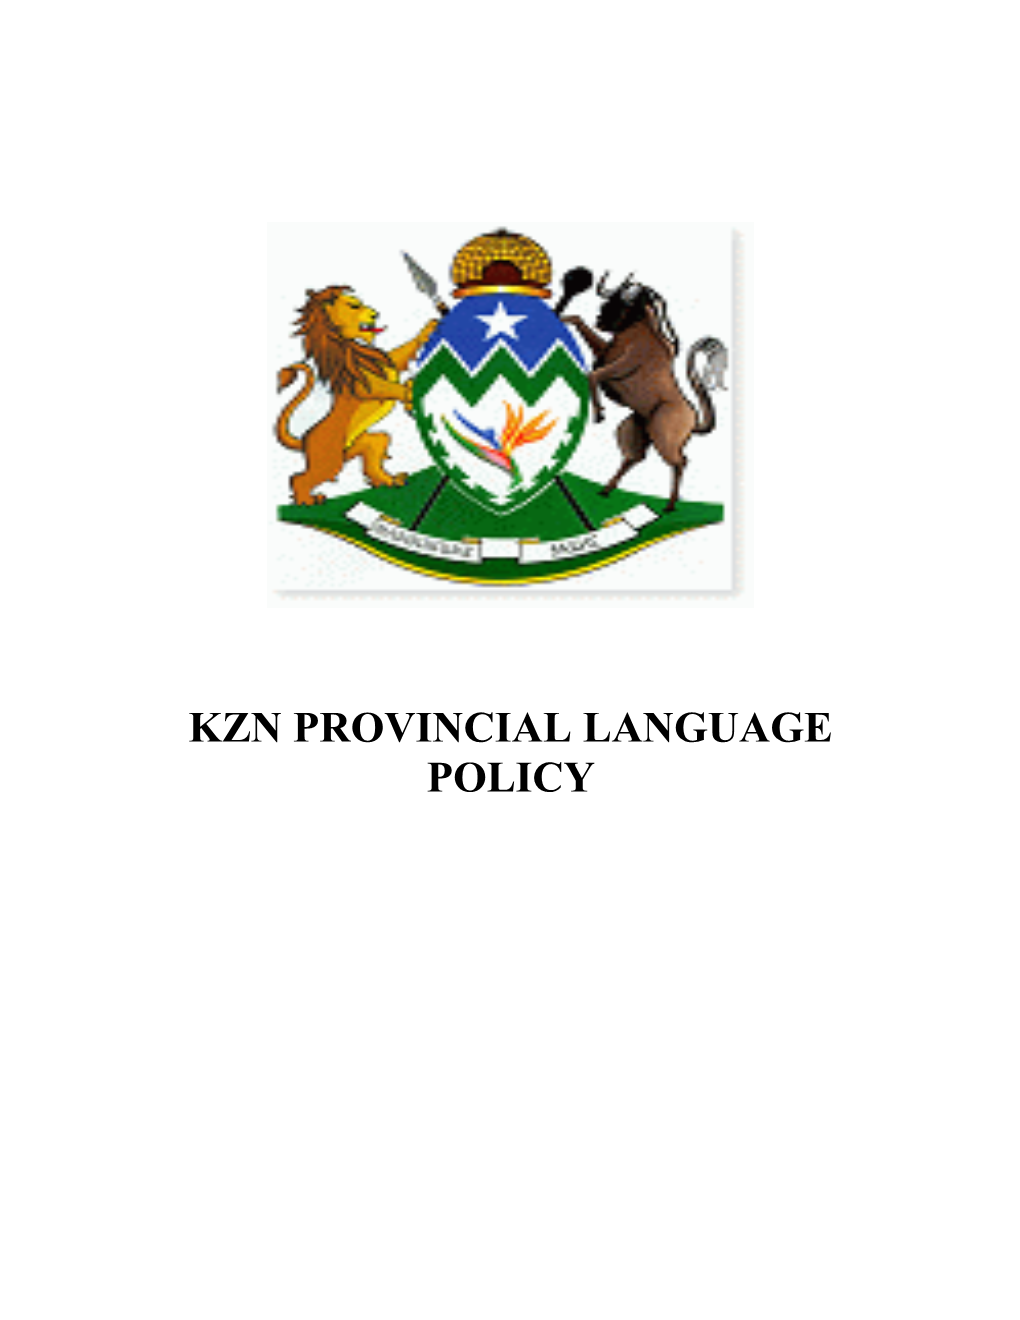 Kzn Provincial Language Policy